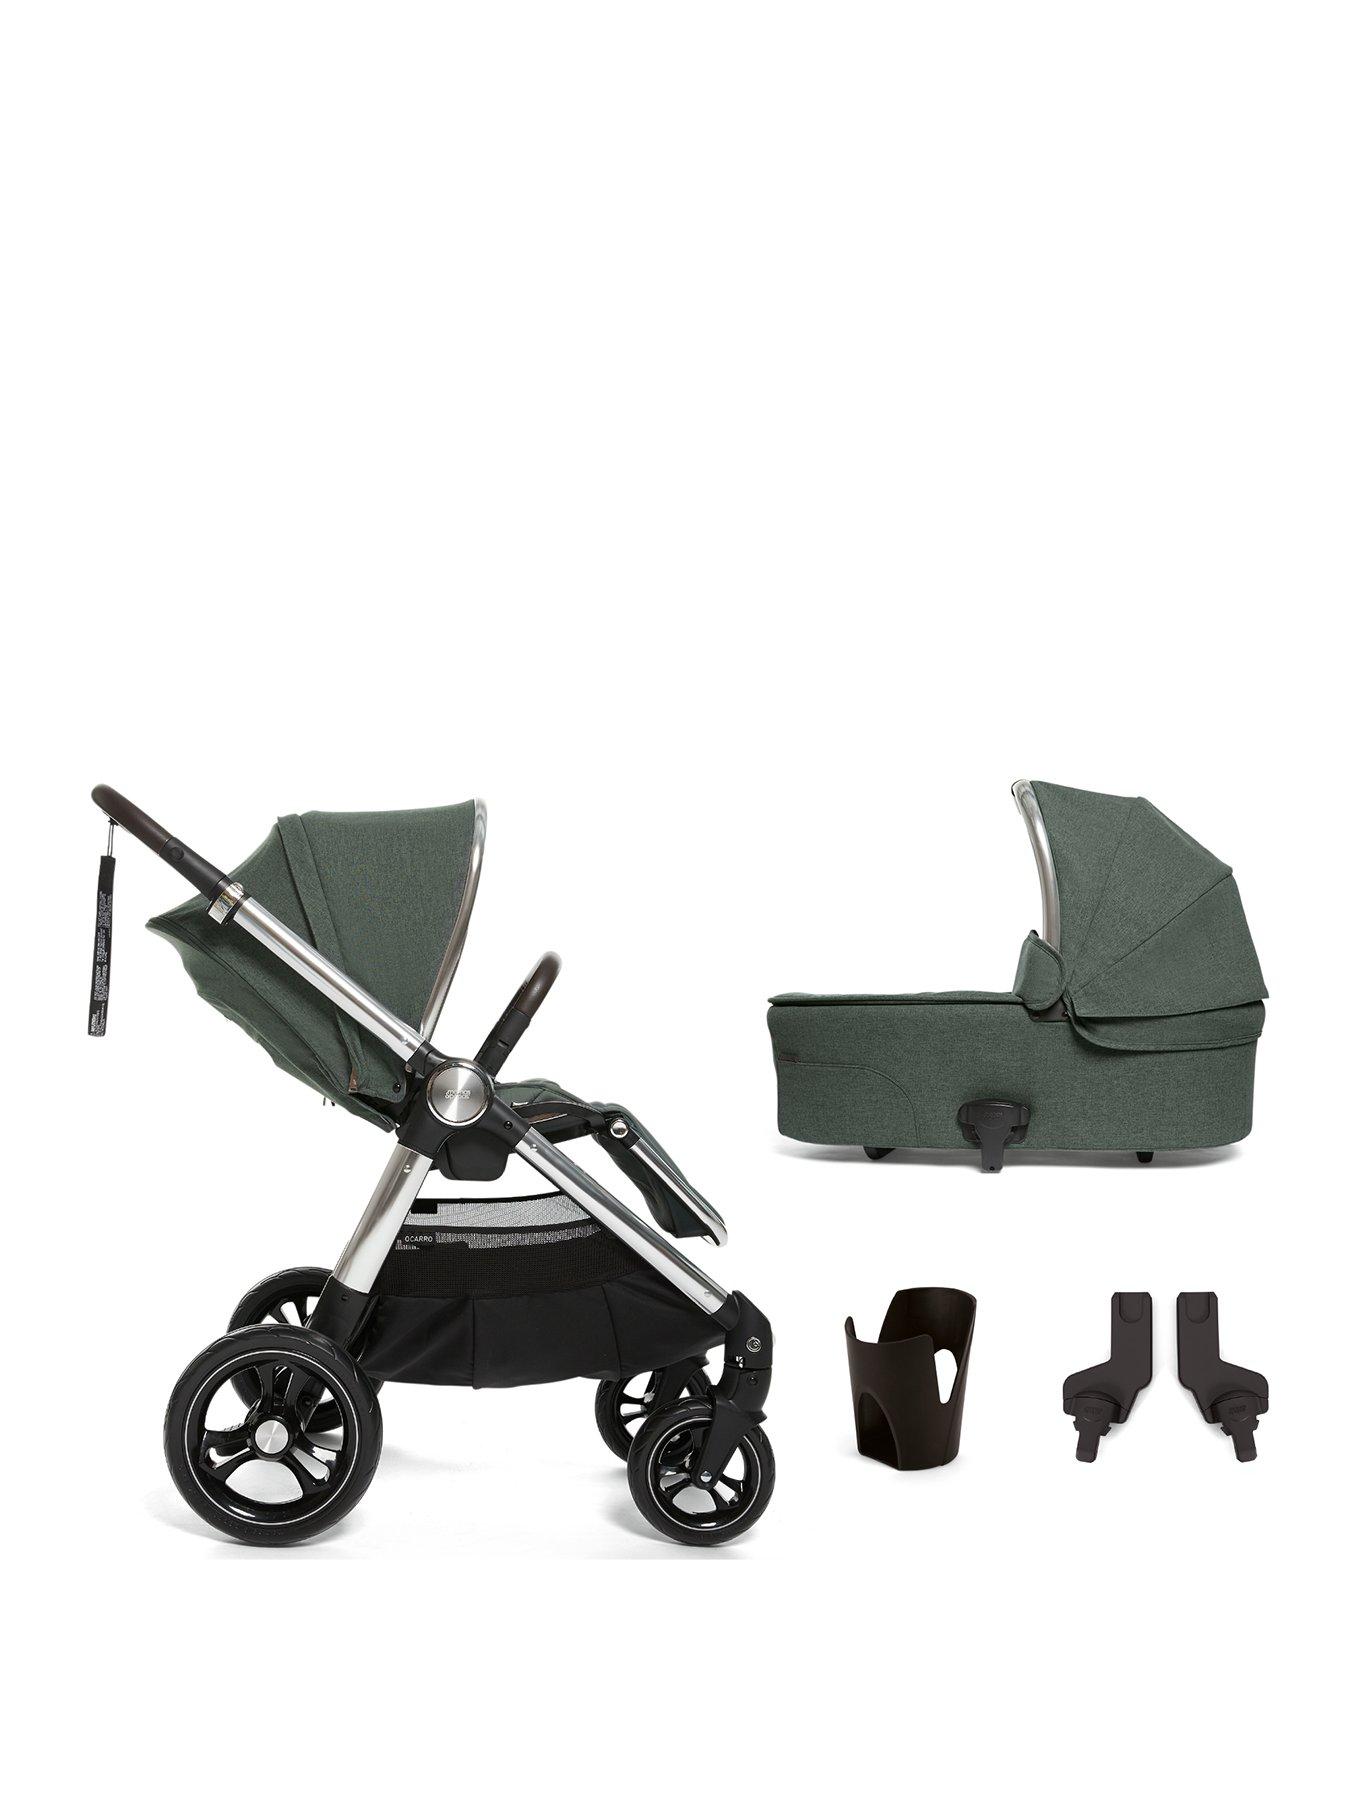 mamas and papas stroller comparison